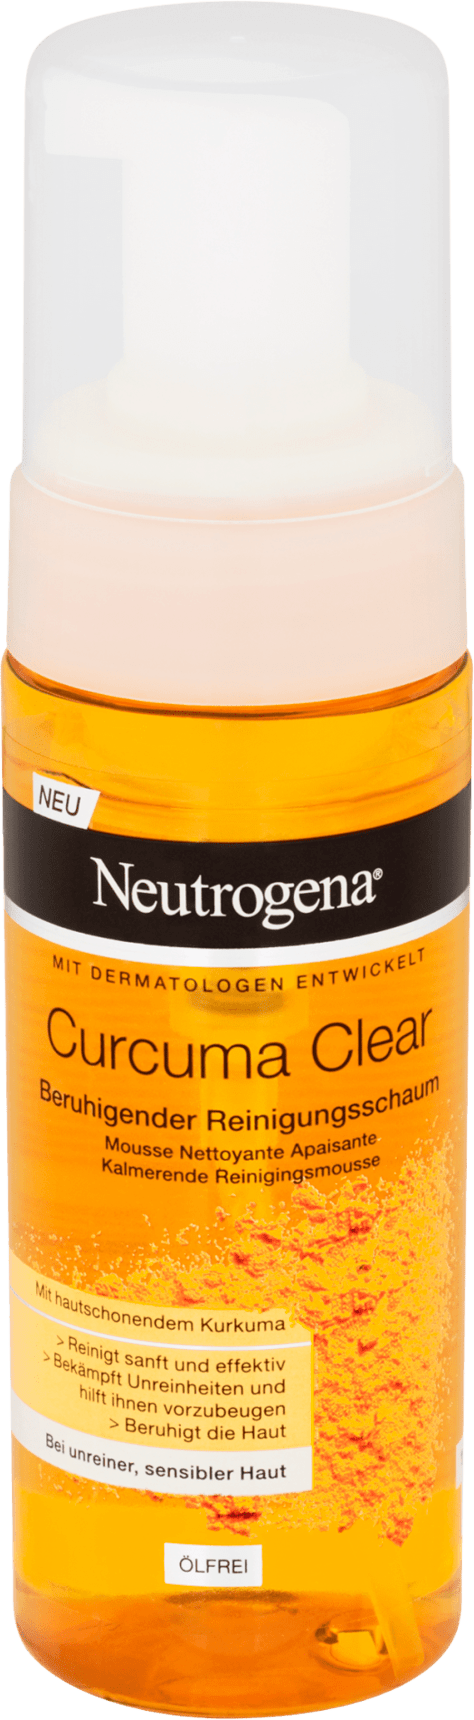 Pin on Neutrogena® Curcuma Clear Pflegelinie